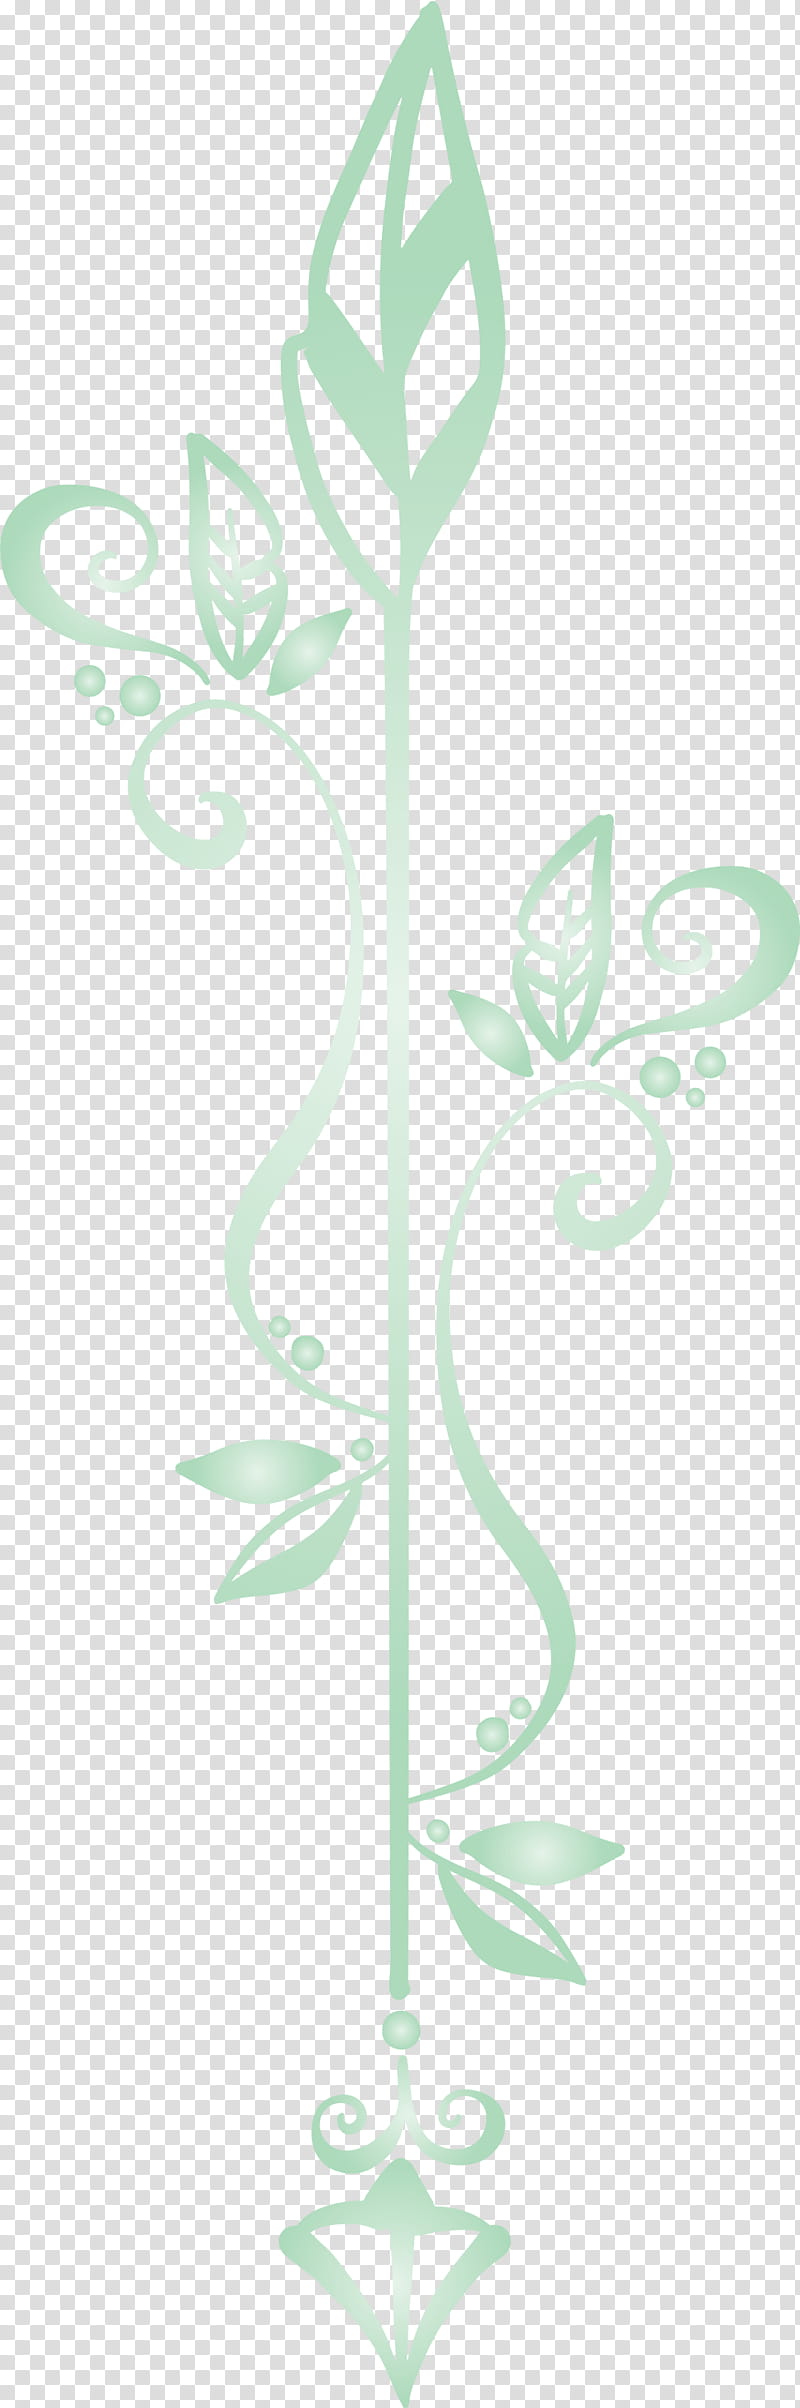 Boho Arrow Cute Arrow Hand drawn Arrow, Plant Stem, Leaf, Flower, Green, Meter, Line, Plants transparent background PNG clipart